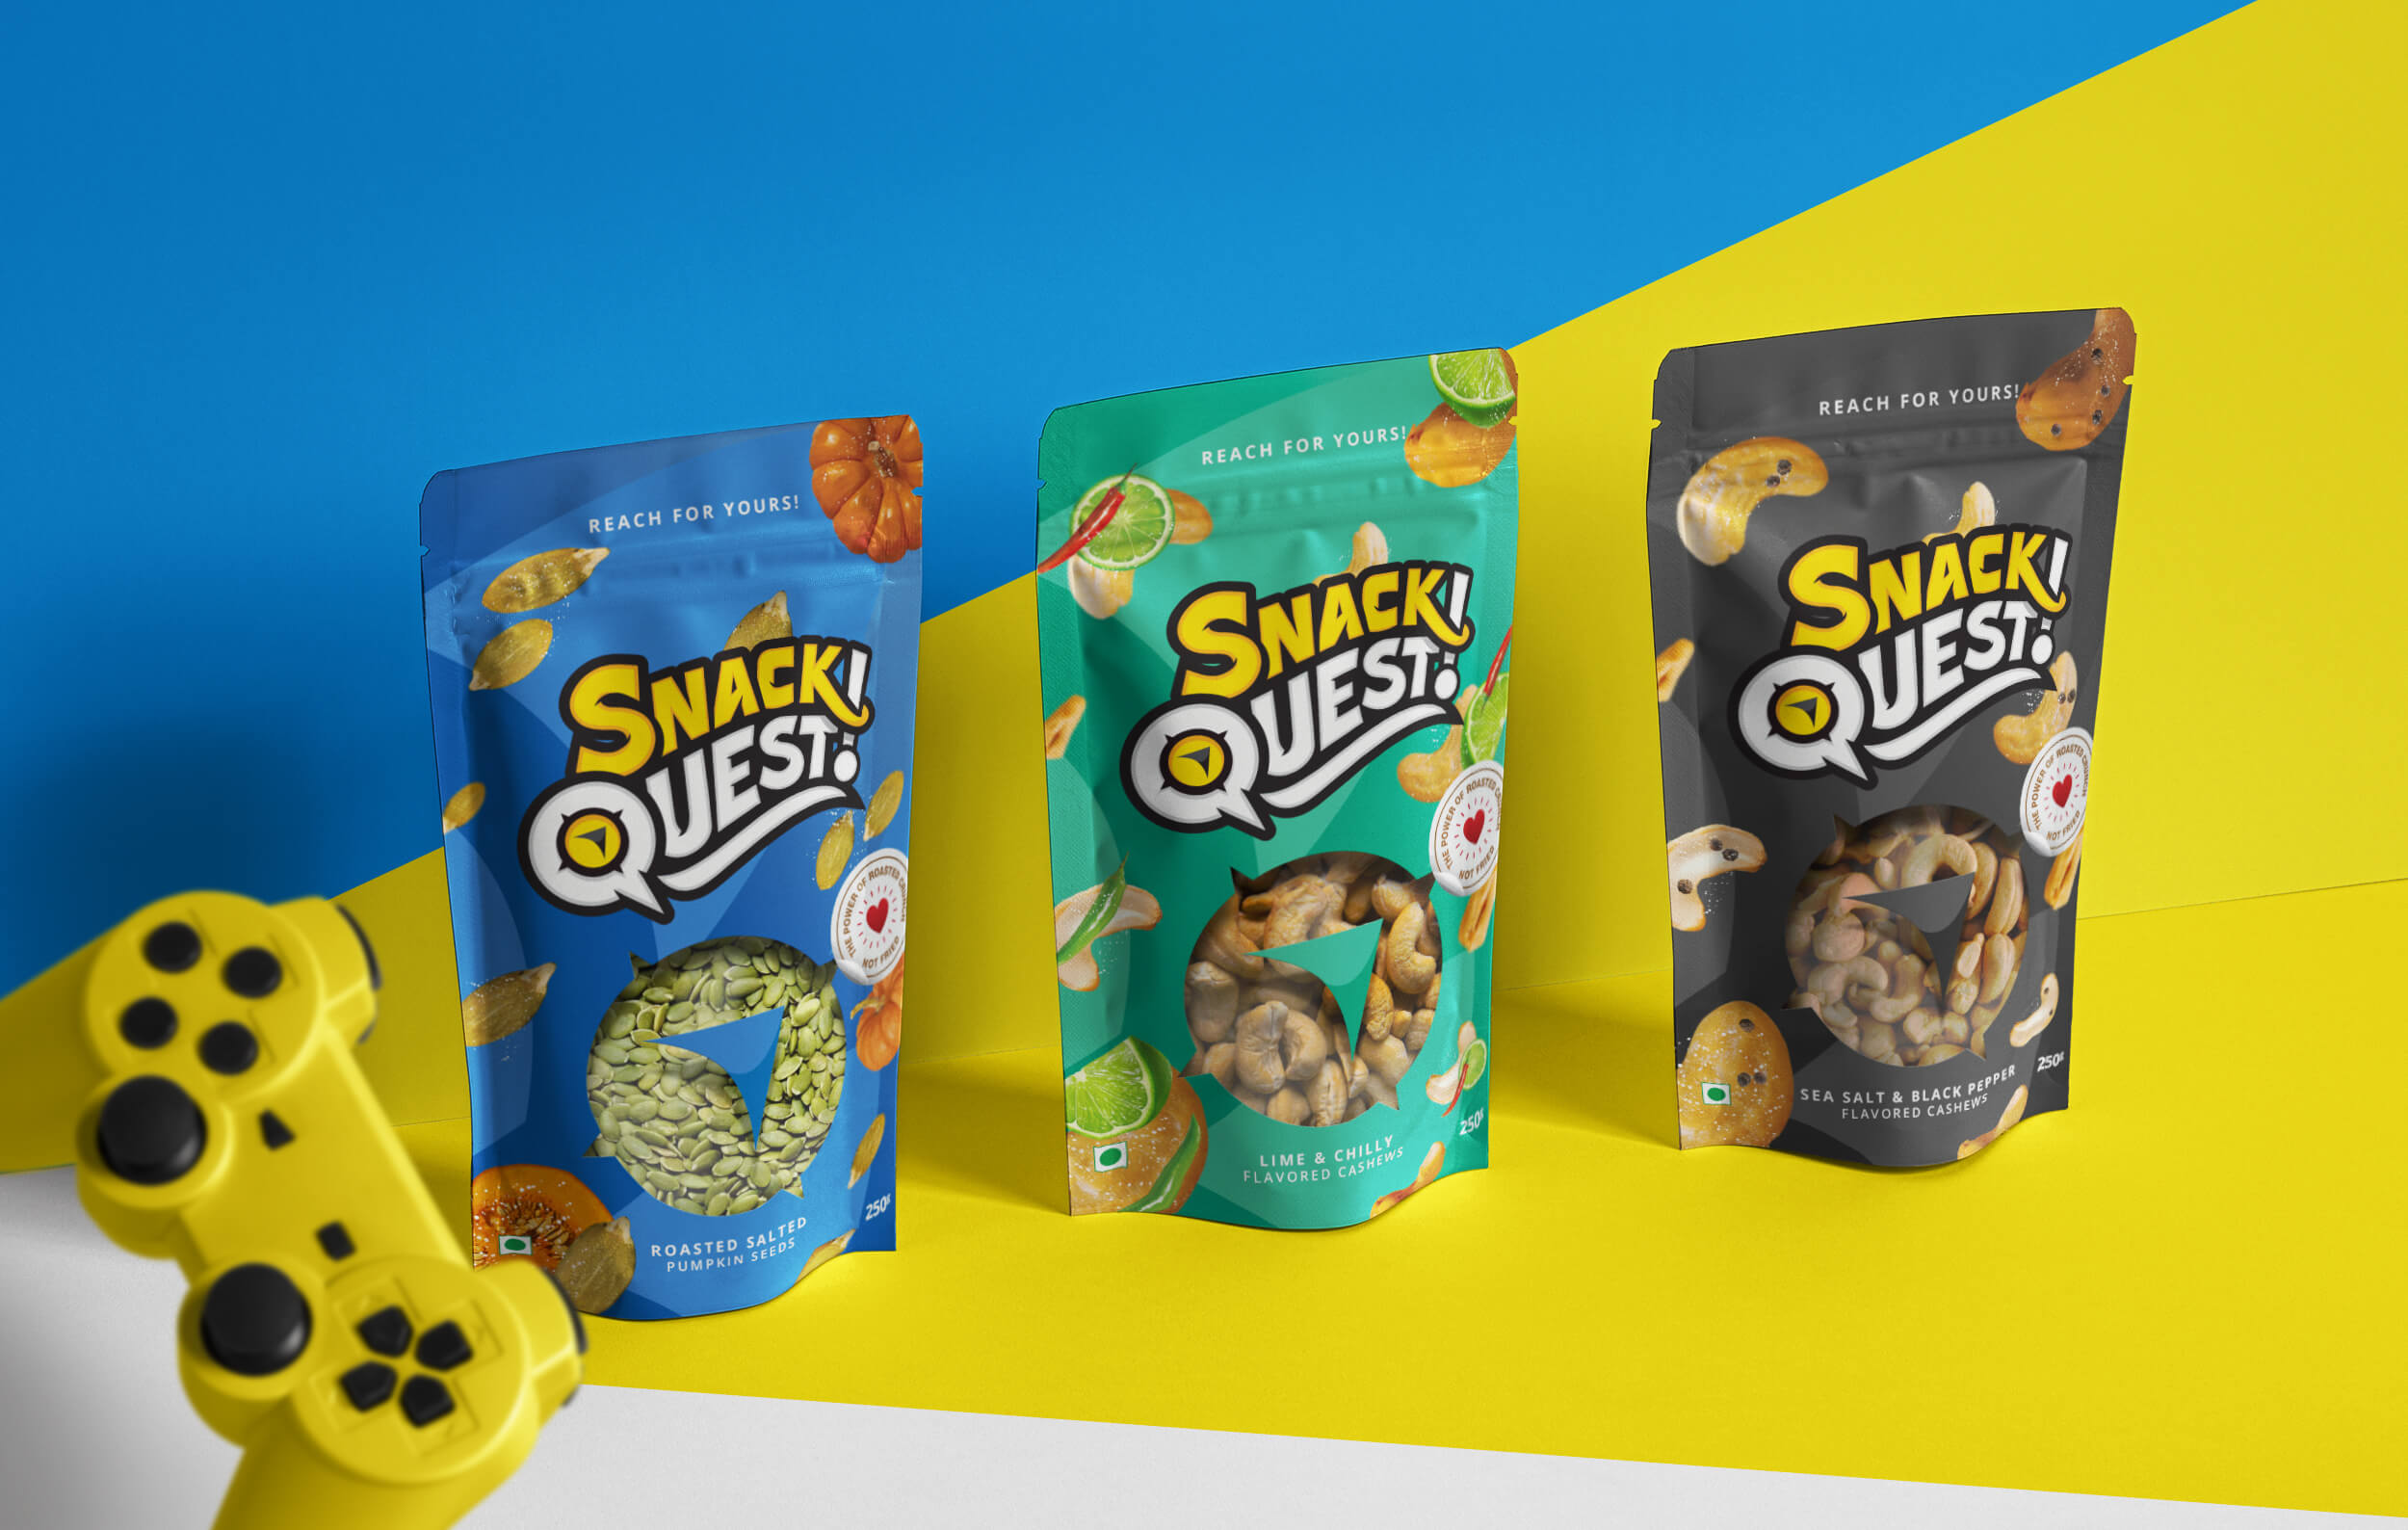 Snack-Quest-brand-identity-packaging-design-by-Artisticodopeo-Designz(3).jpg Image